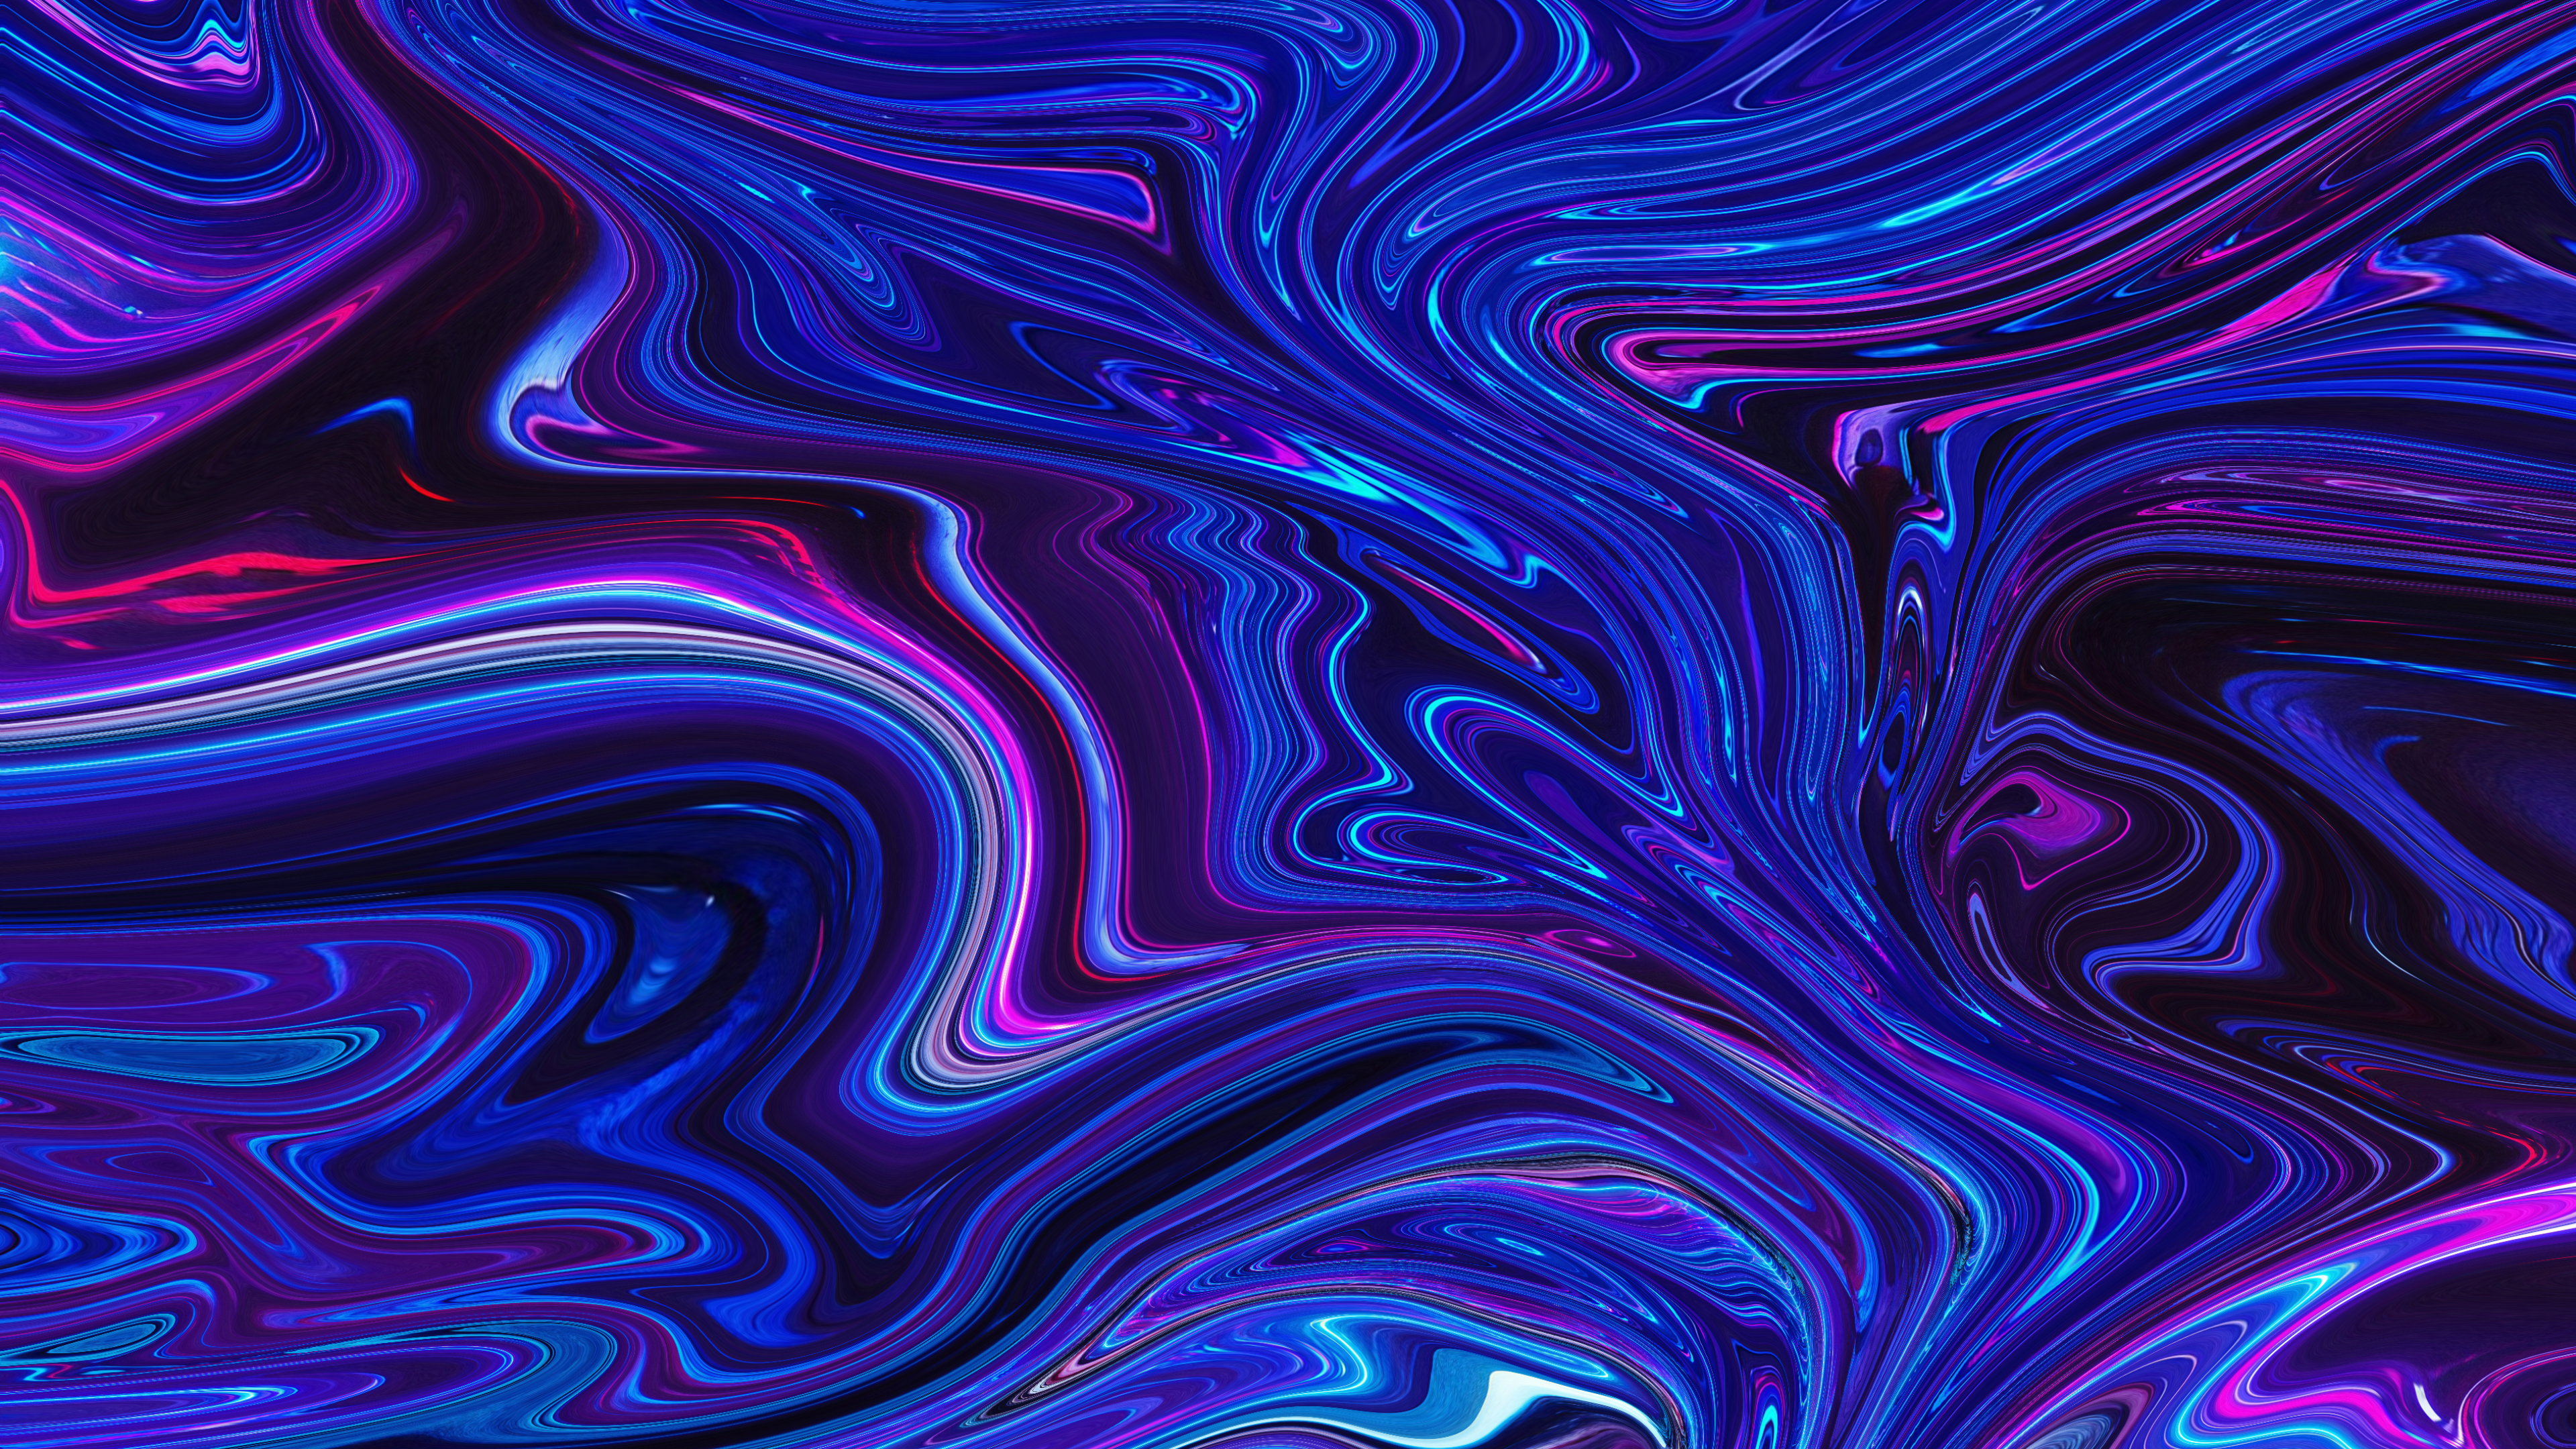 Blue Fractal Vortex Swirling HD Trippy Wallpapers  HD Wallpapers  ID  61202